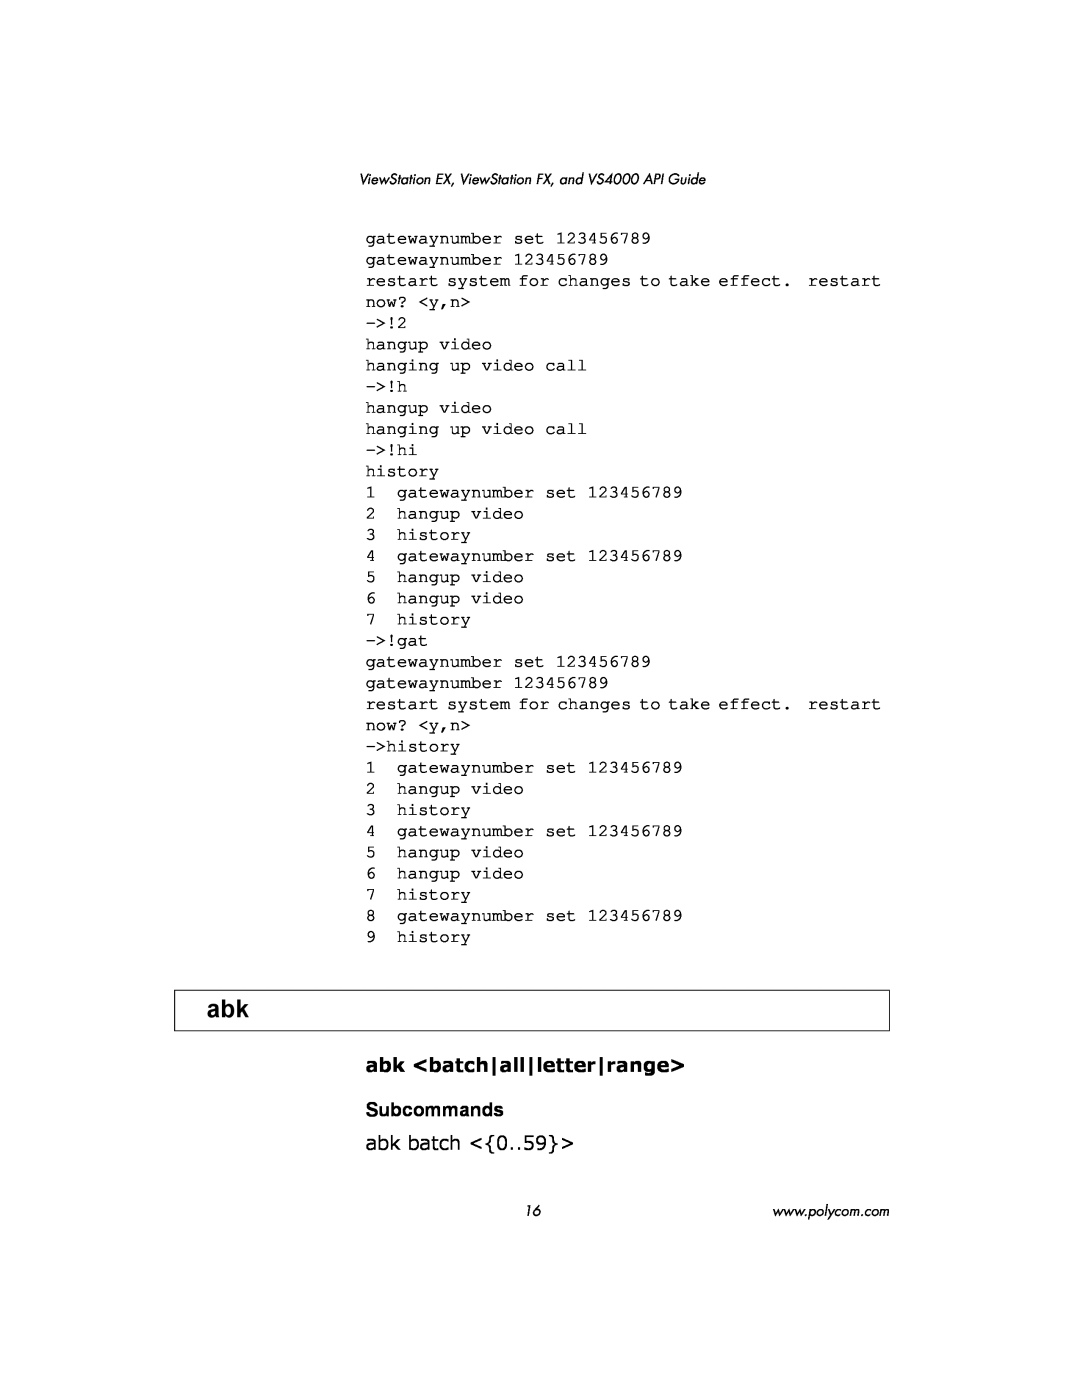 Polycom VIEWSTATION EX manual abk <batch|all|letter|range>, Subcommands, abk batch <0..59> 